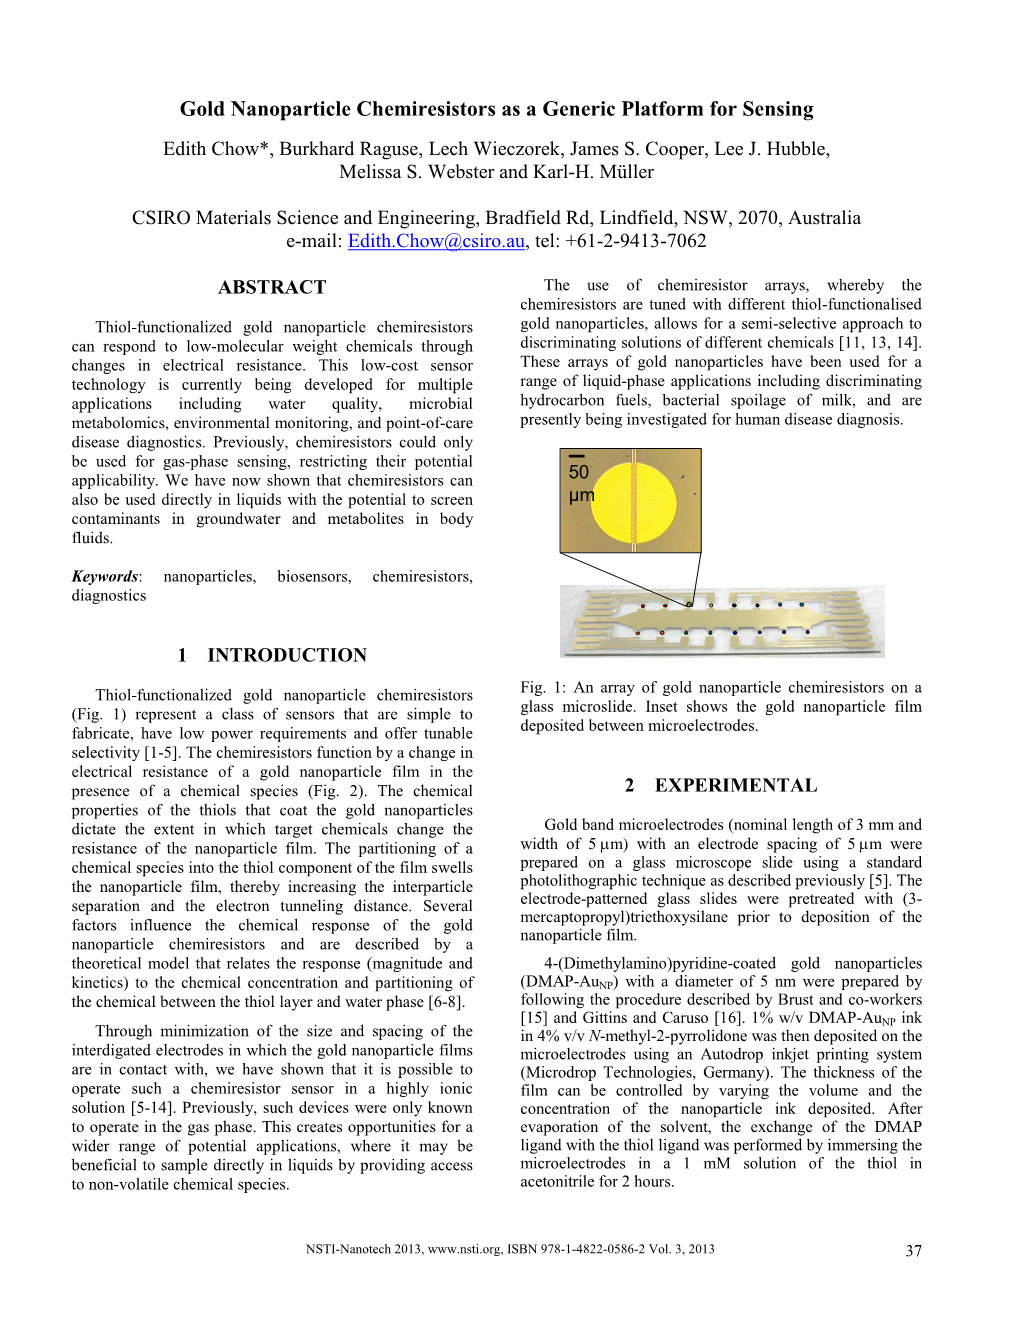 Gold Nanoparticle Chemiresistors As a Generic Platform for Sensing Edith Chow*, Burkhard Raguse, Lech Wieczorek, James S